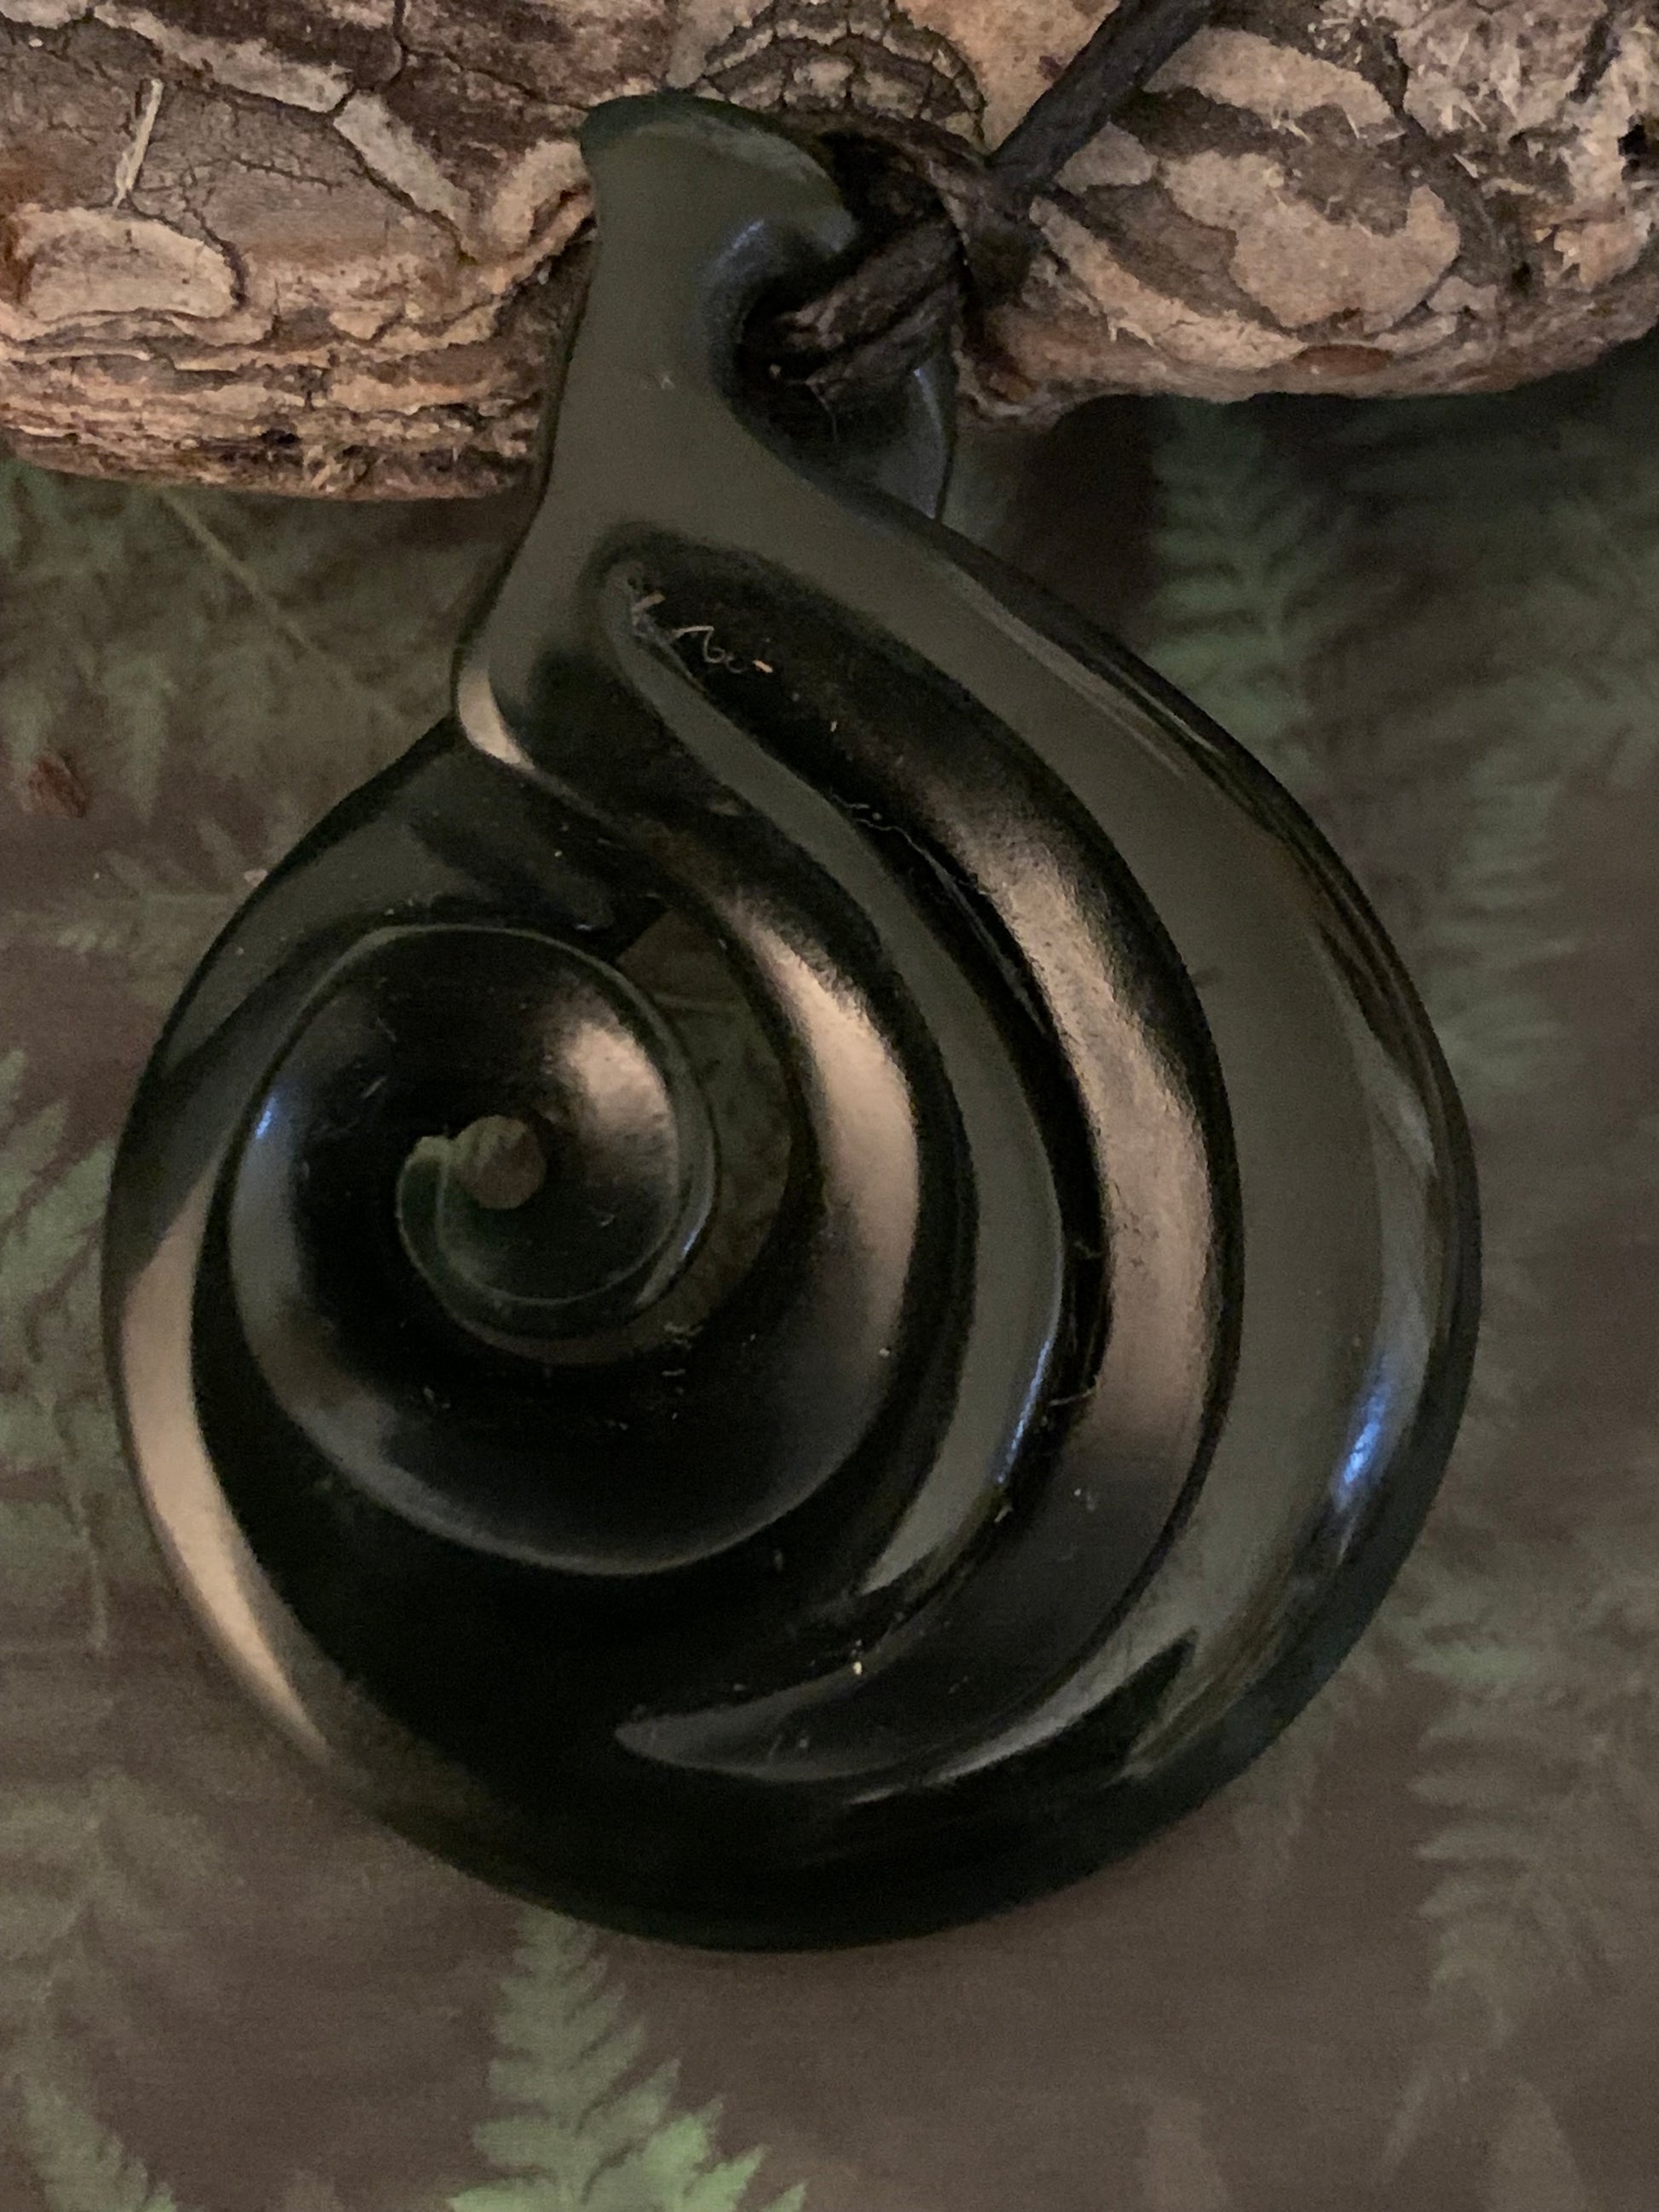 Pounamu koru twist pendant from New Zealand available from Silver Fern Gallery